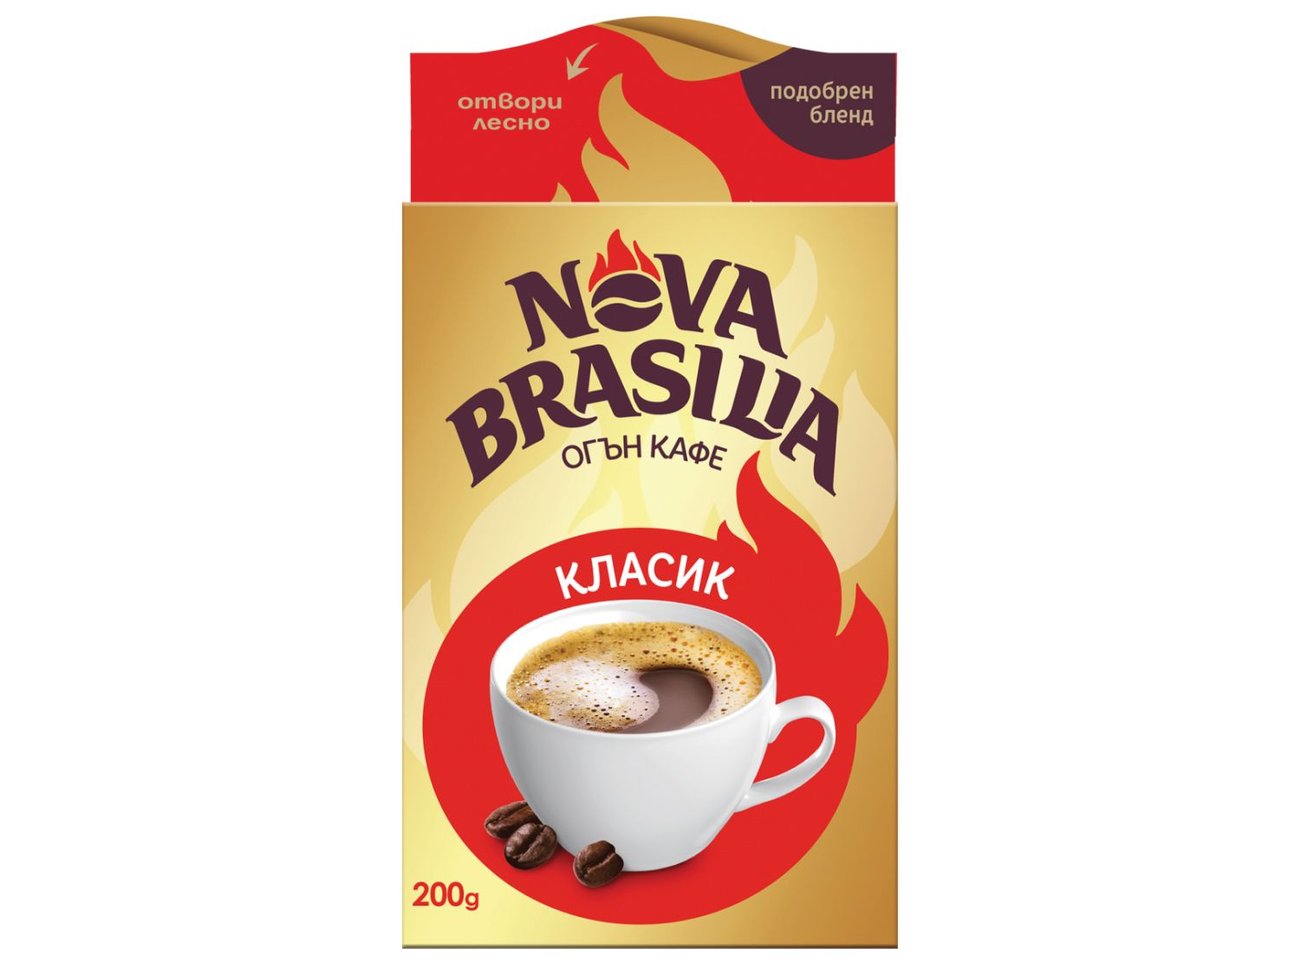 Nova Brasilia Мляно кафе